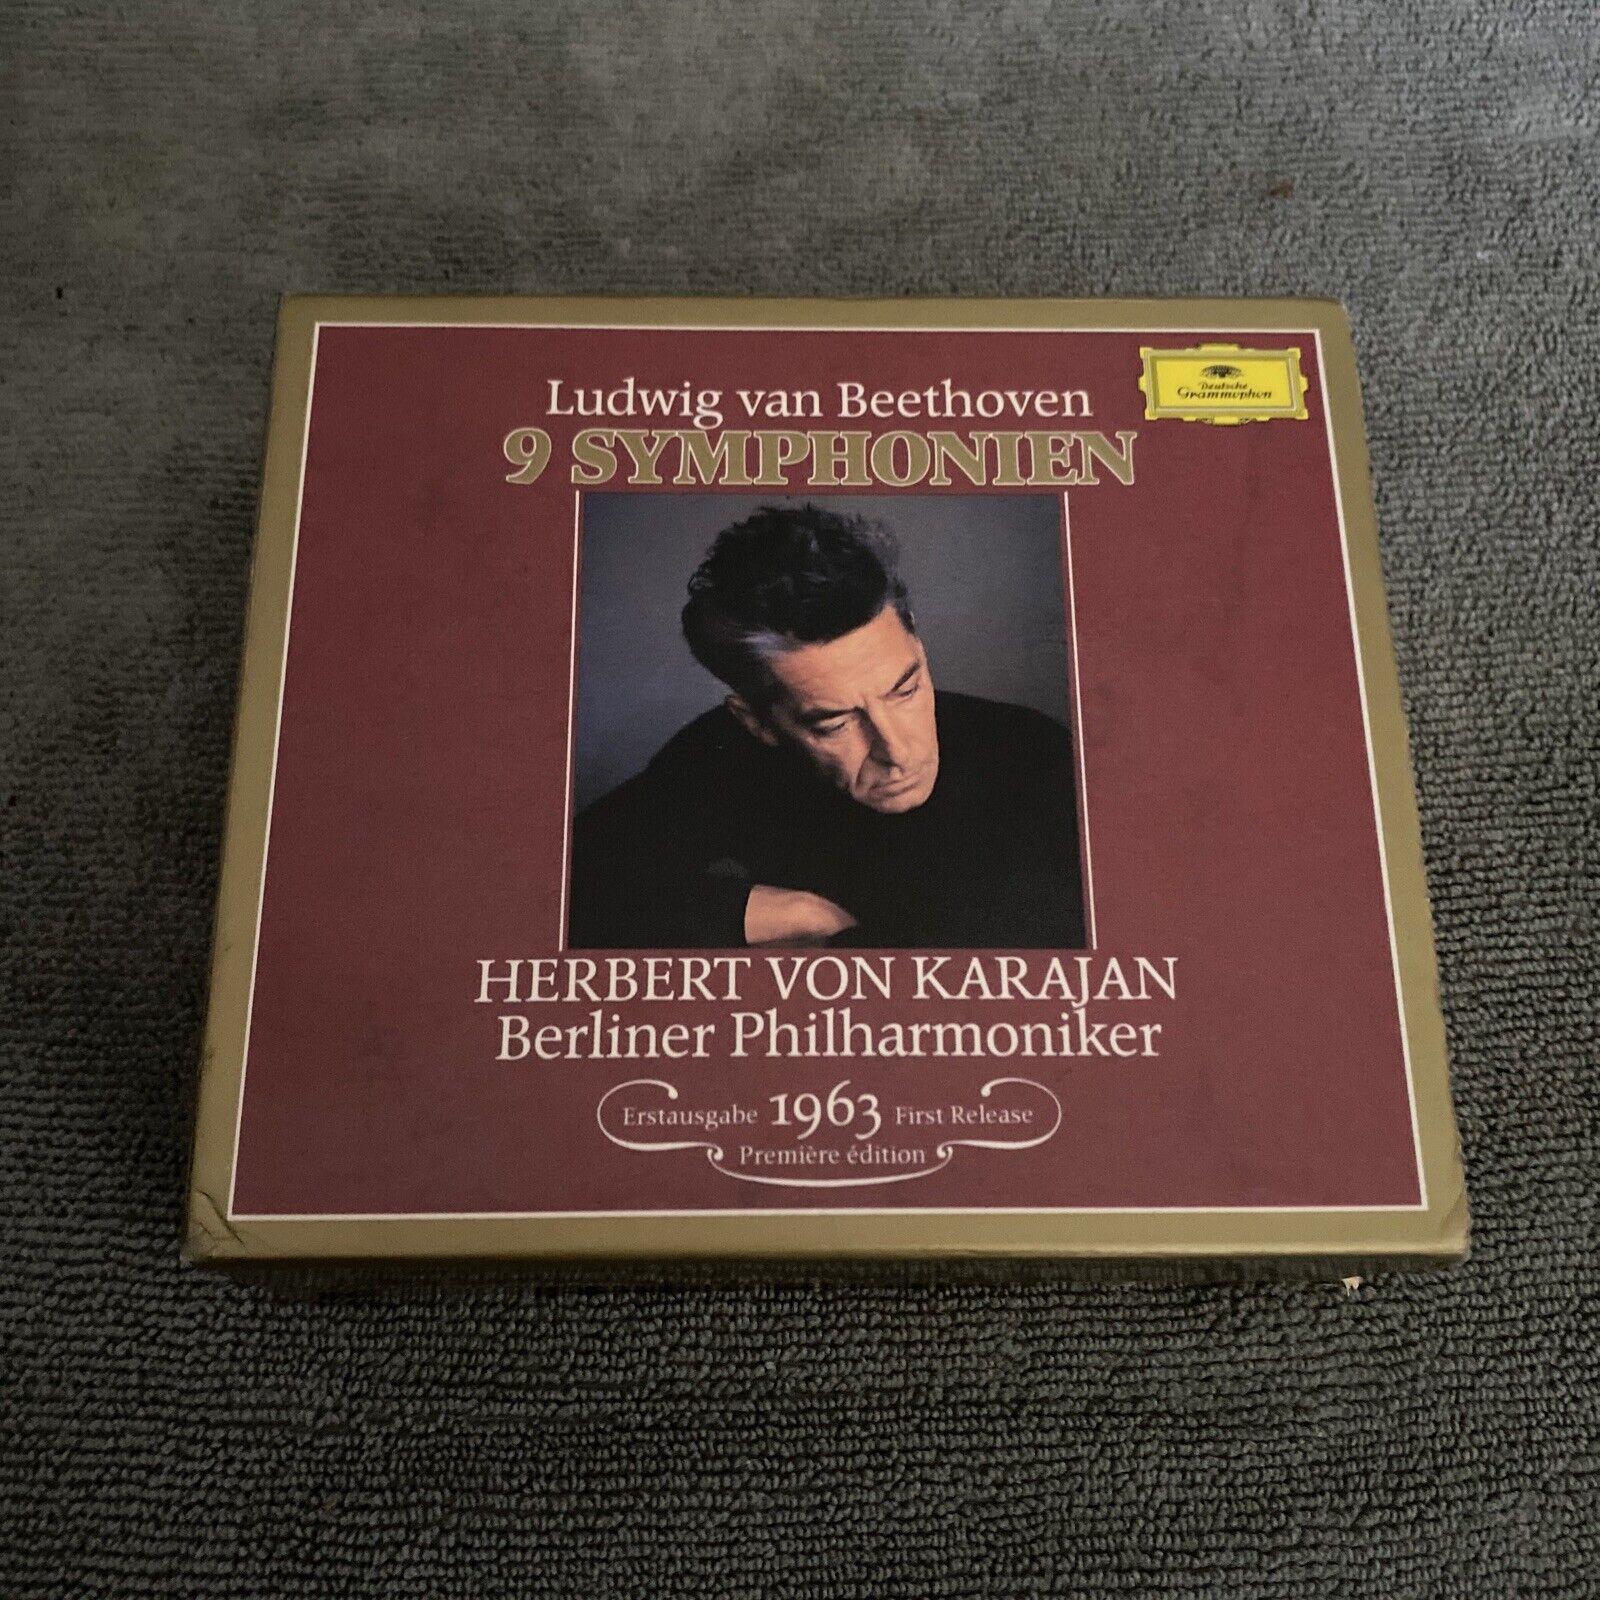 HERBERT VON KARAJAN - LUDWIG VAN BEETHOVEN Only 4 Disc